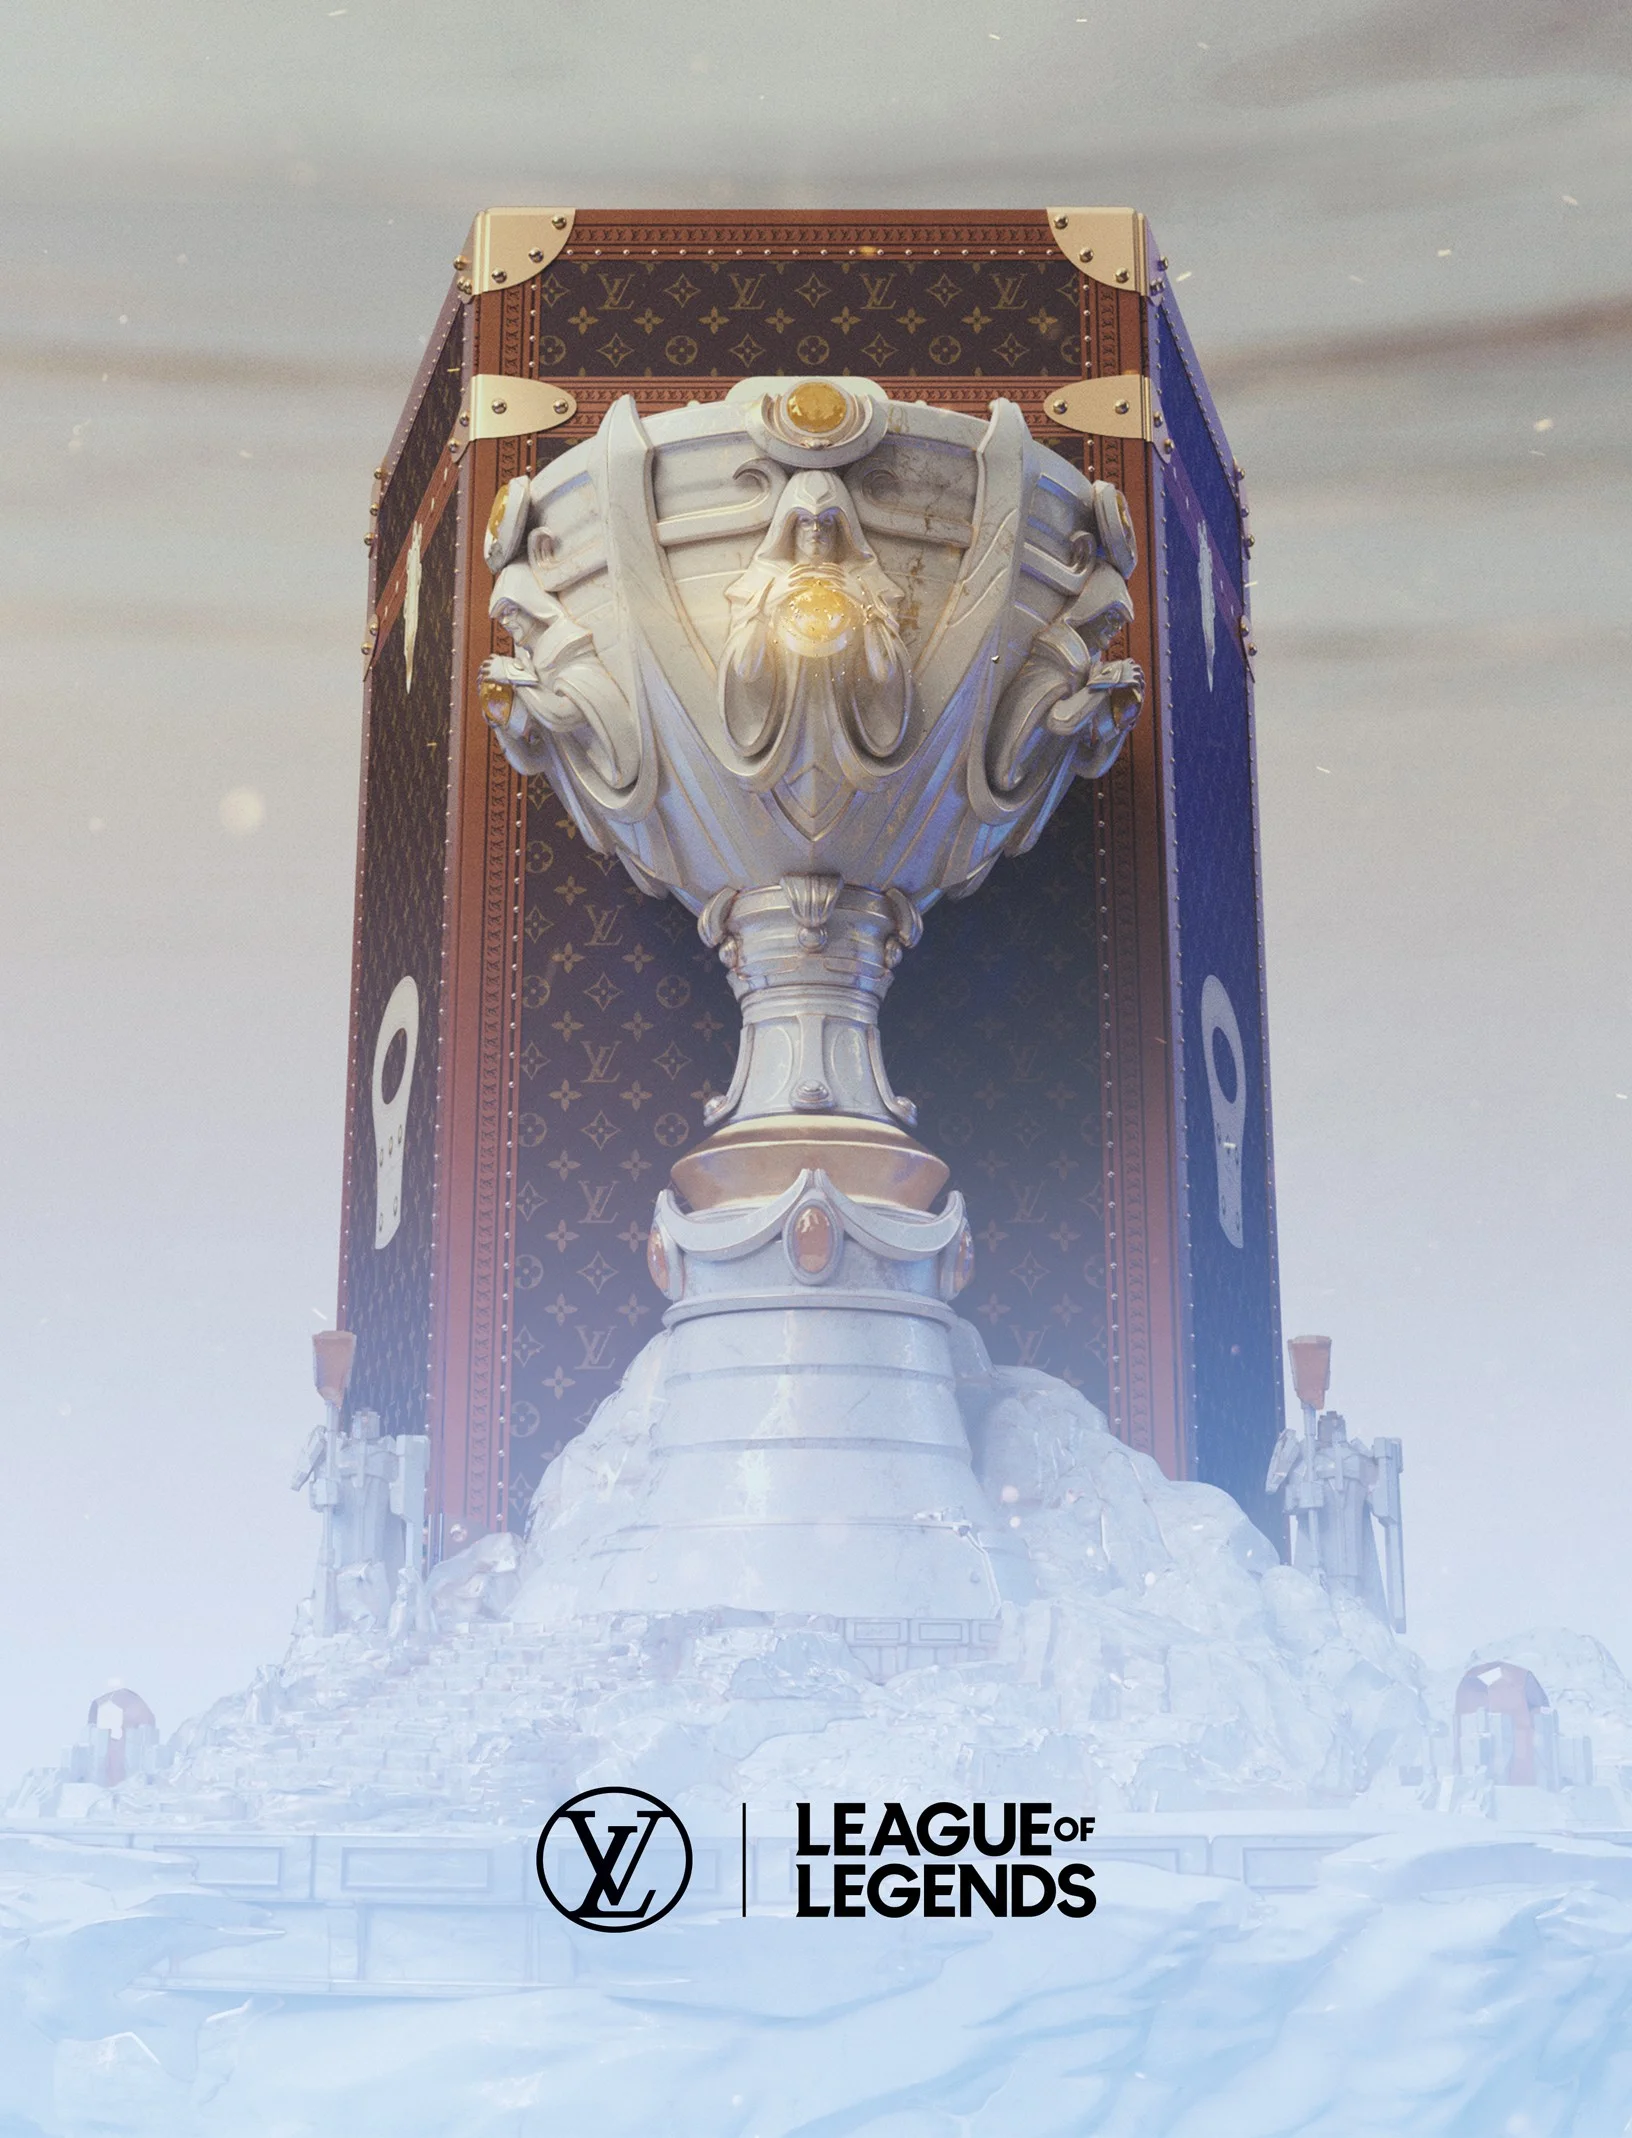 Louis Vuitton выпустит коллекцию по мотивам League of Legends - фото 1